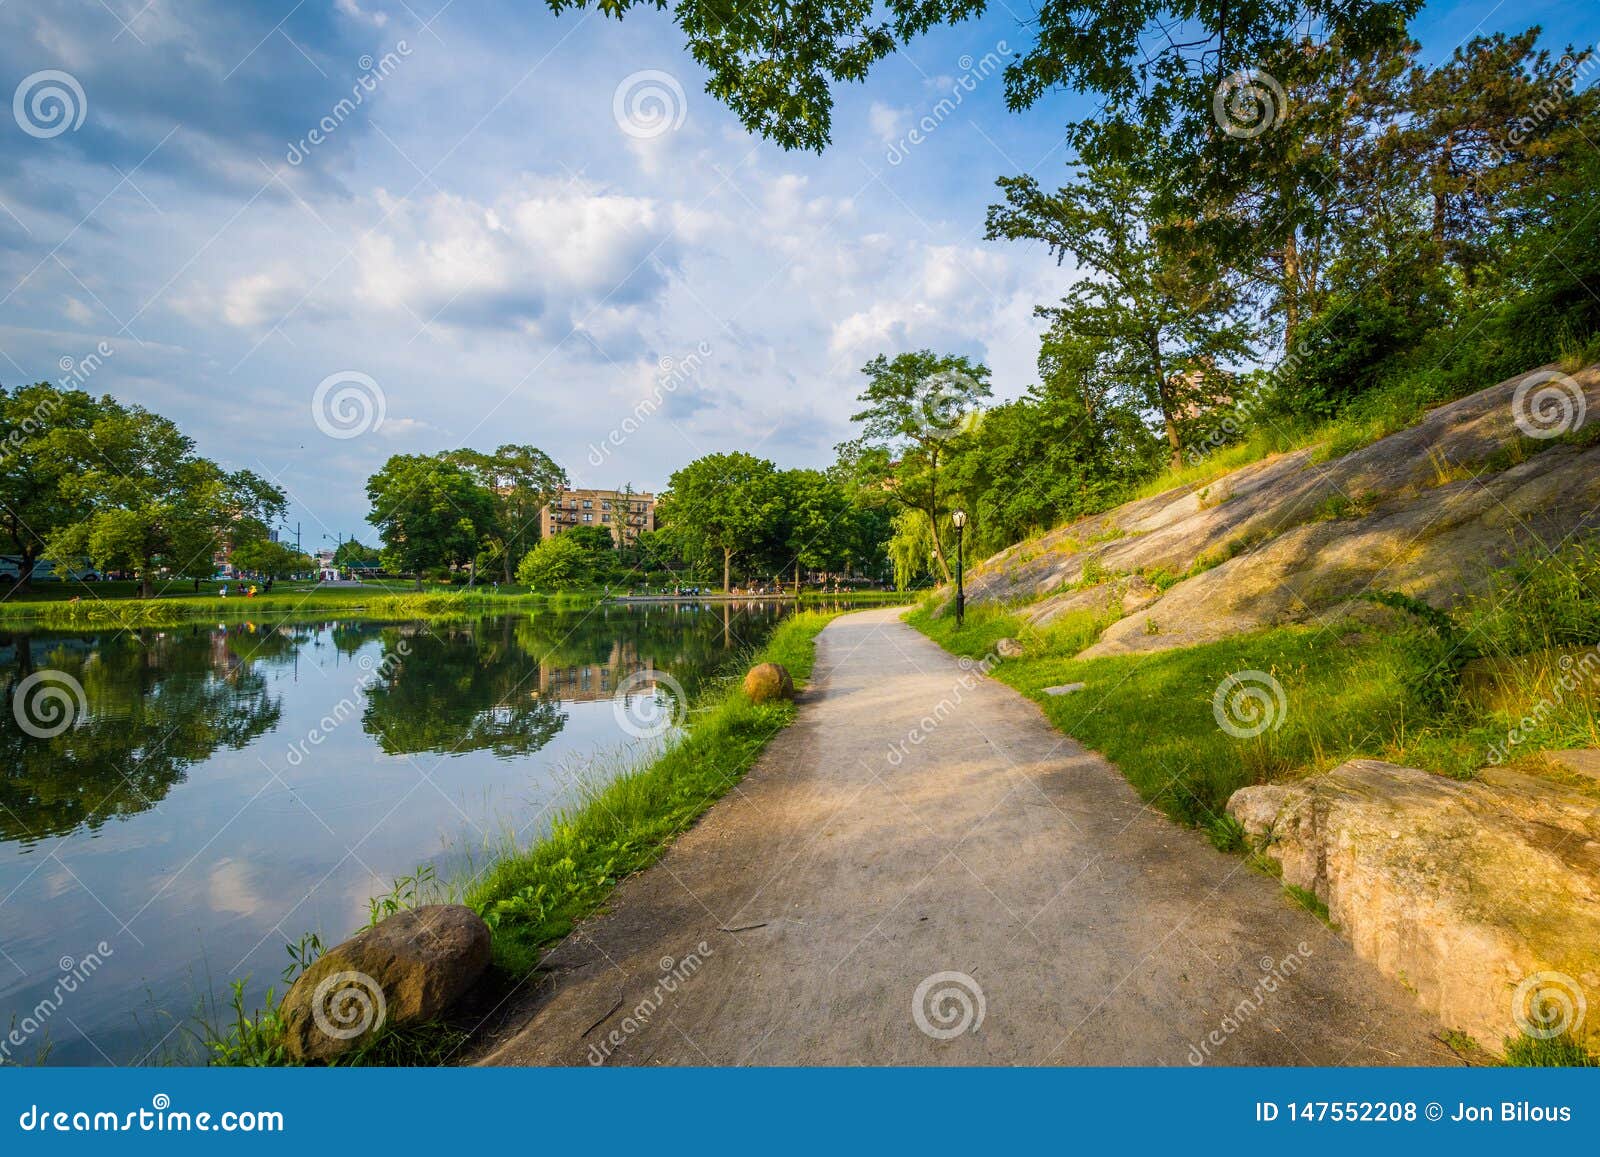 walkway along harlem meer in central park, manhattan, new york city